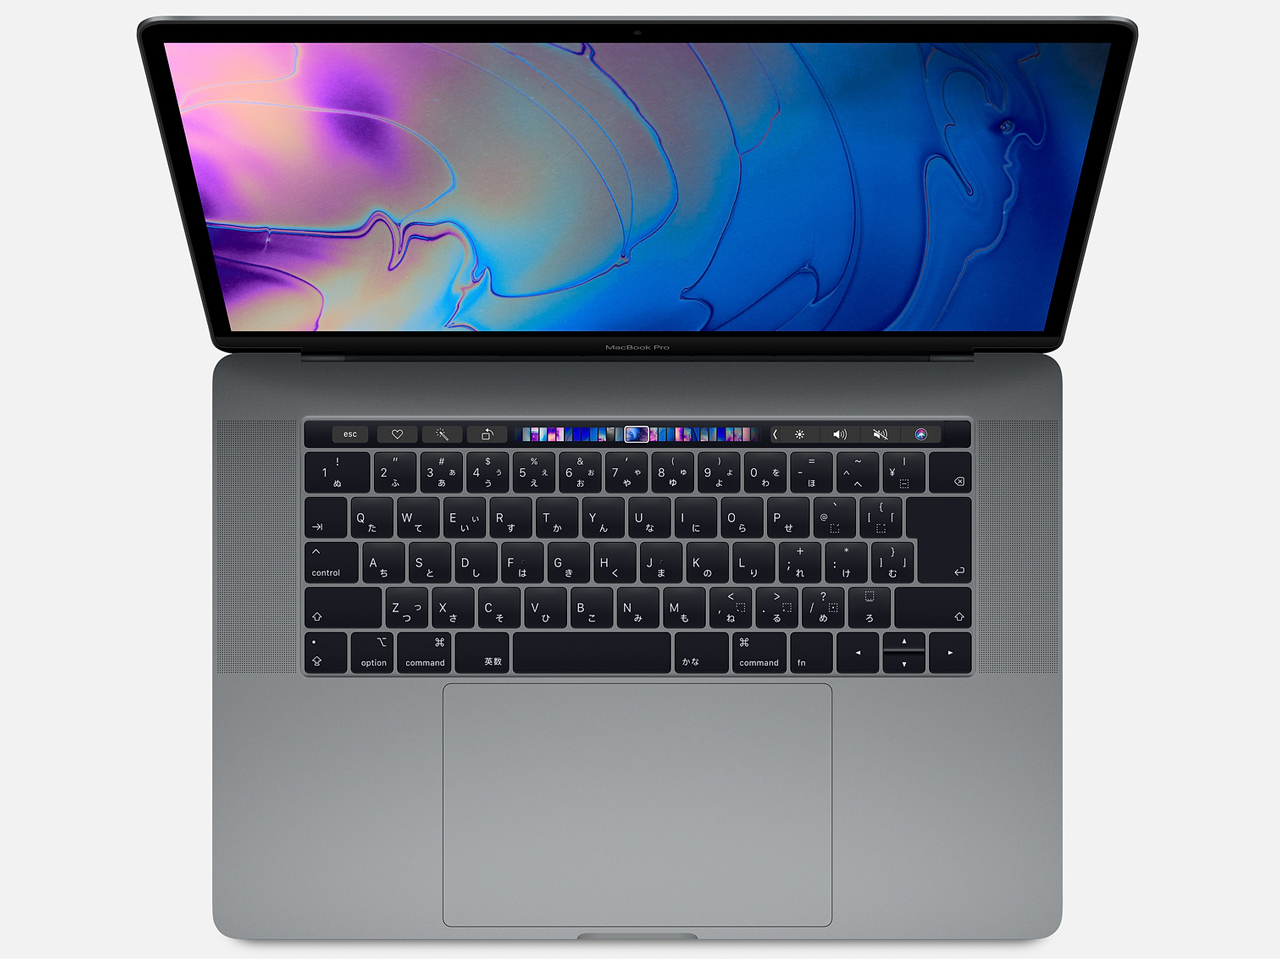 MacBook Pro Retinaディスプレイ 2600/15.4 MV902J/A [スペースグレイ]